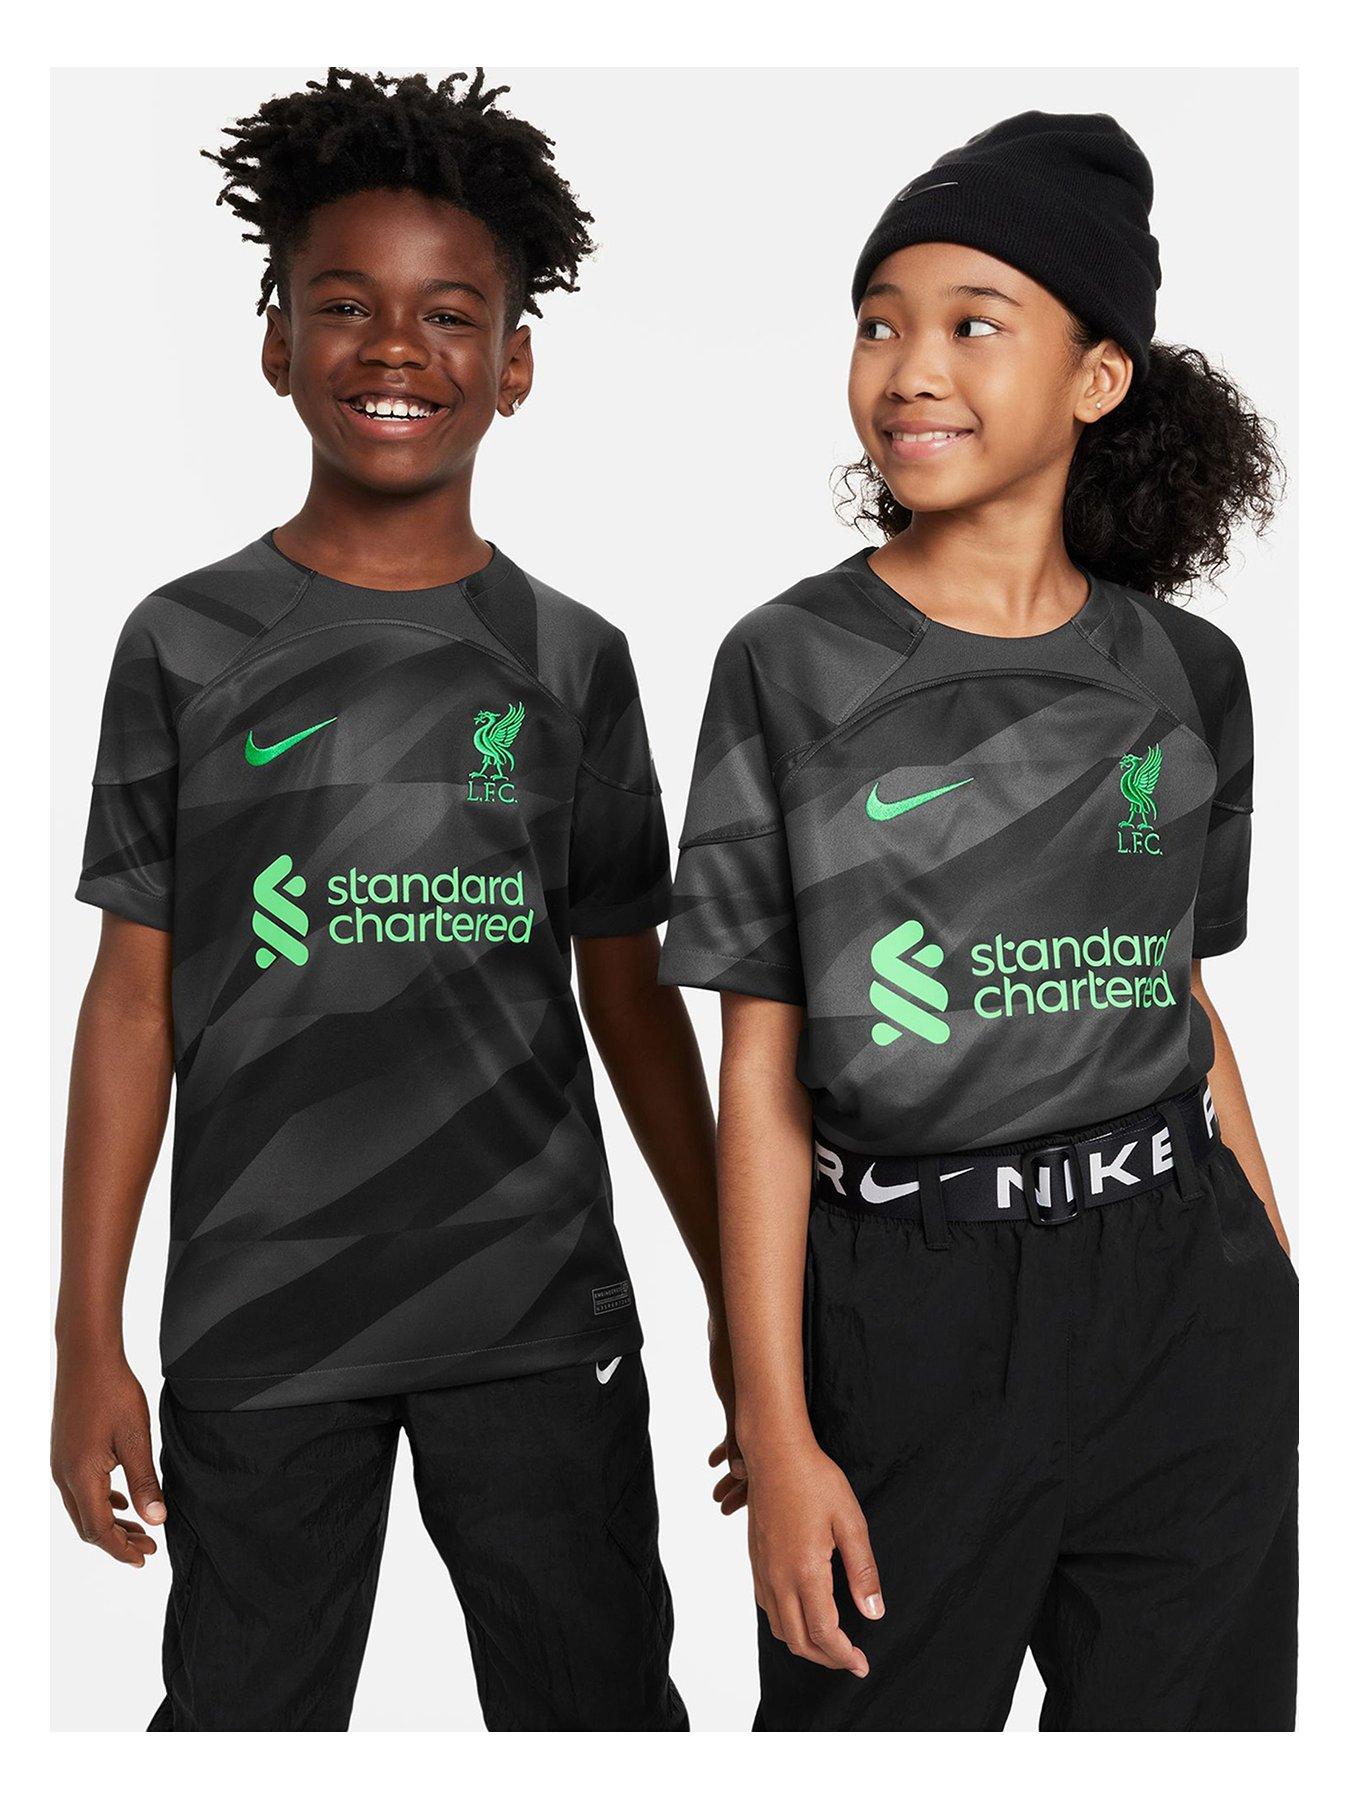 Kit Nike Sportswear for Child. T-shirt + Shorts